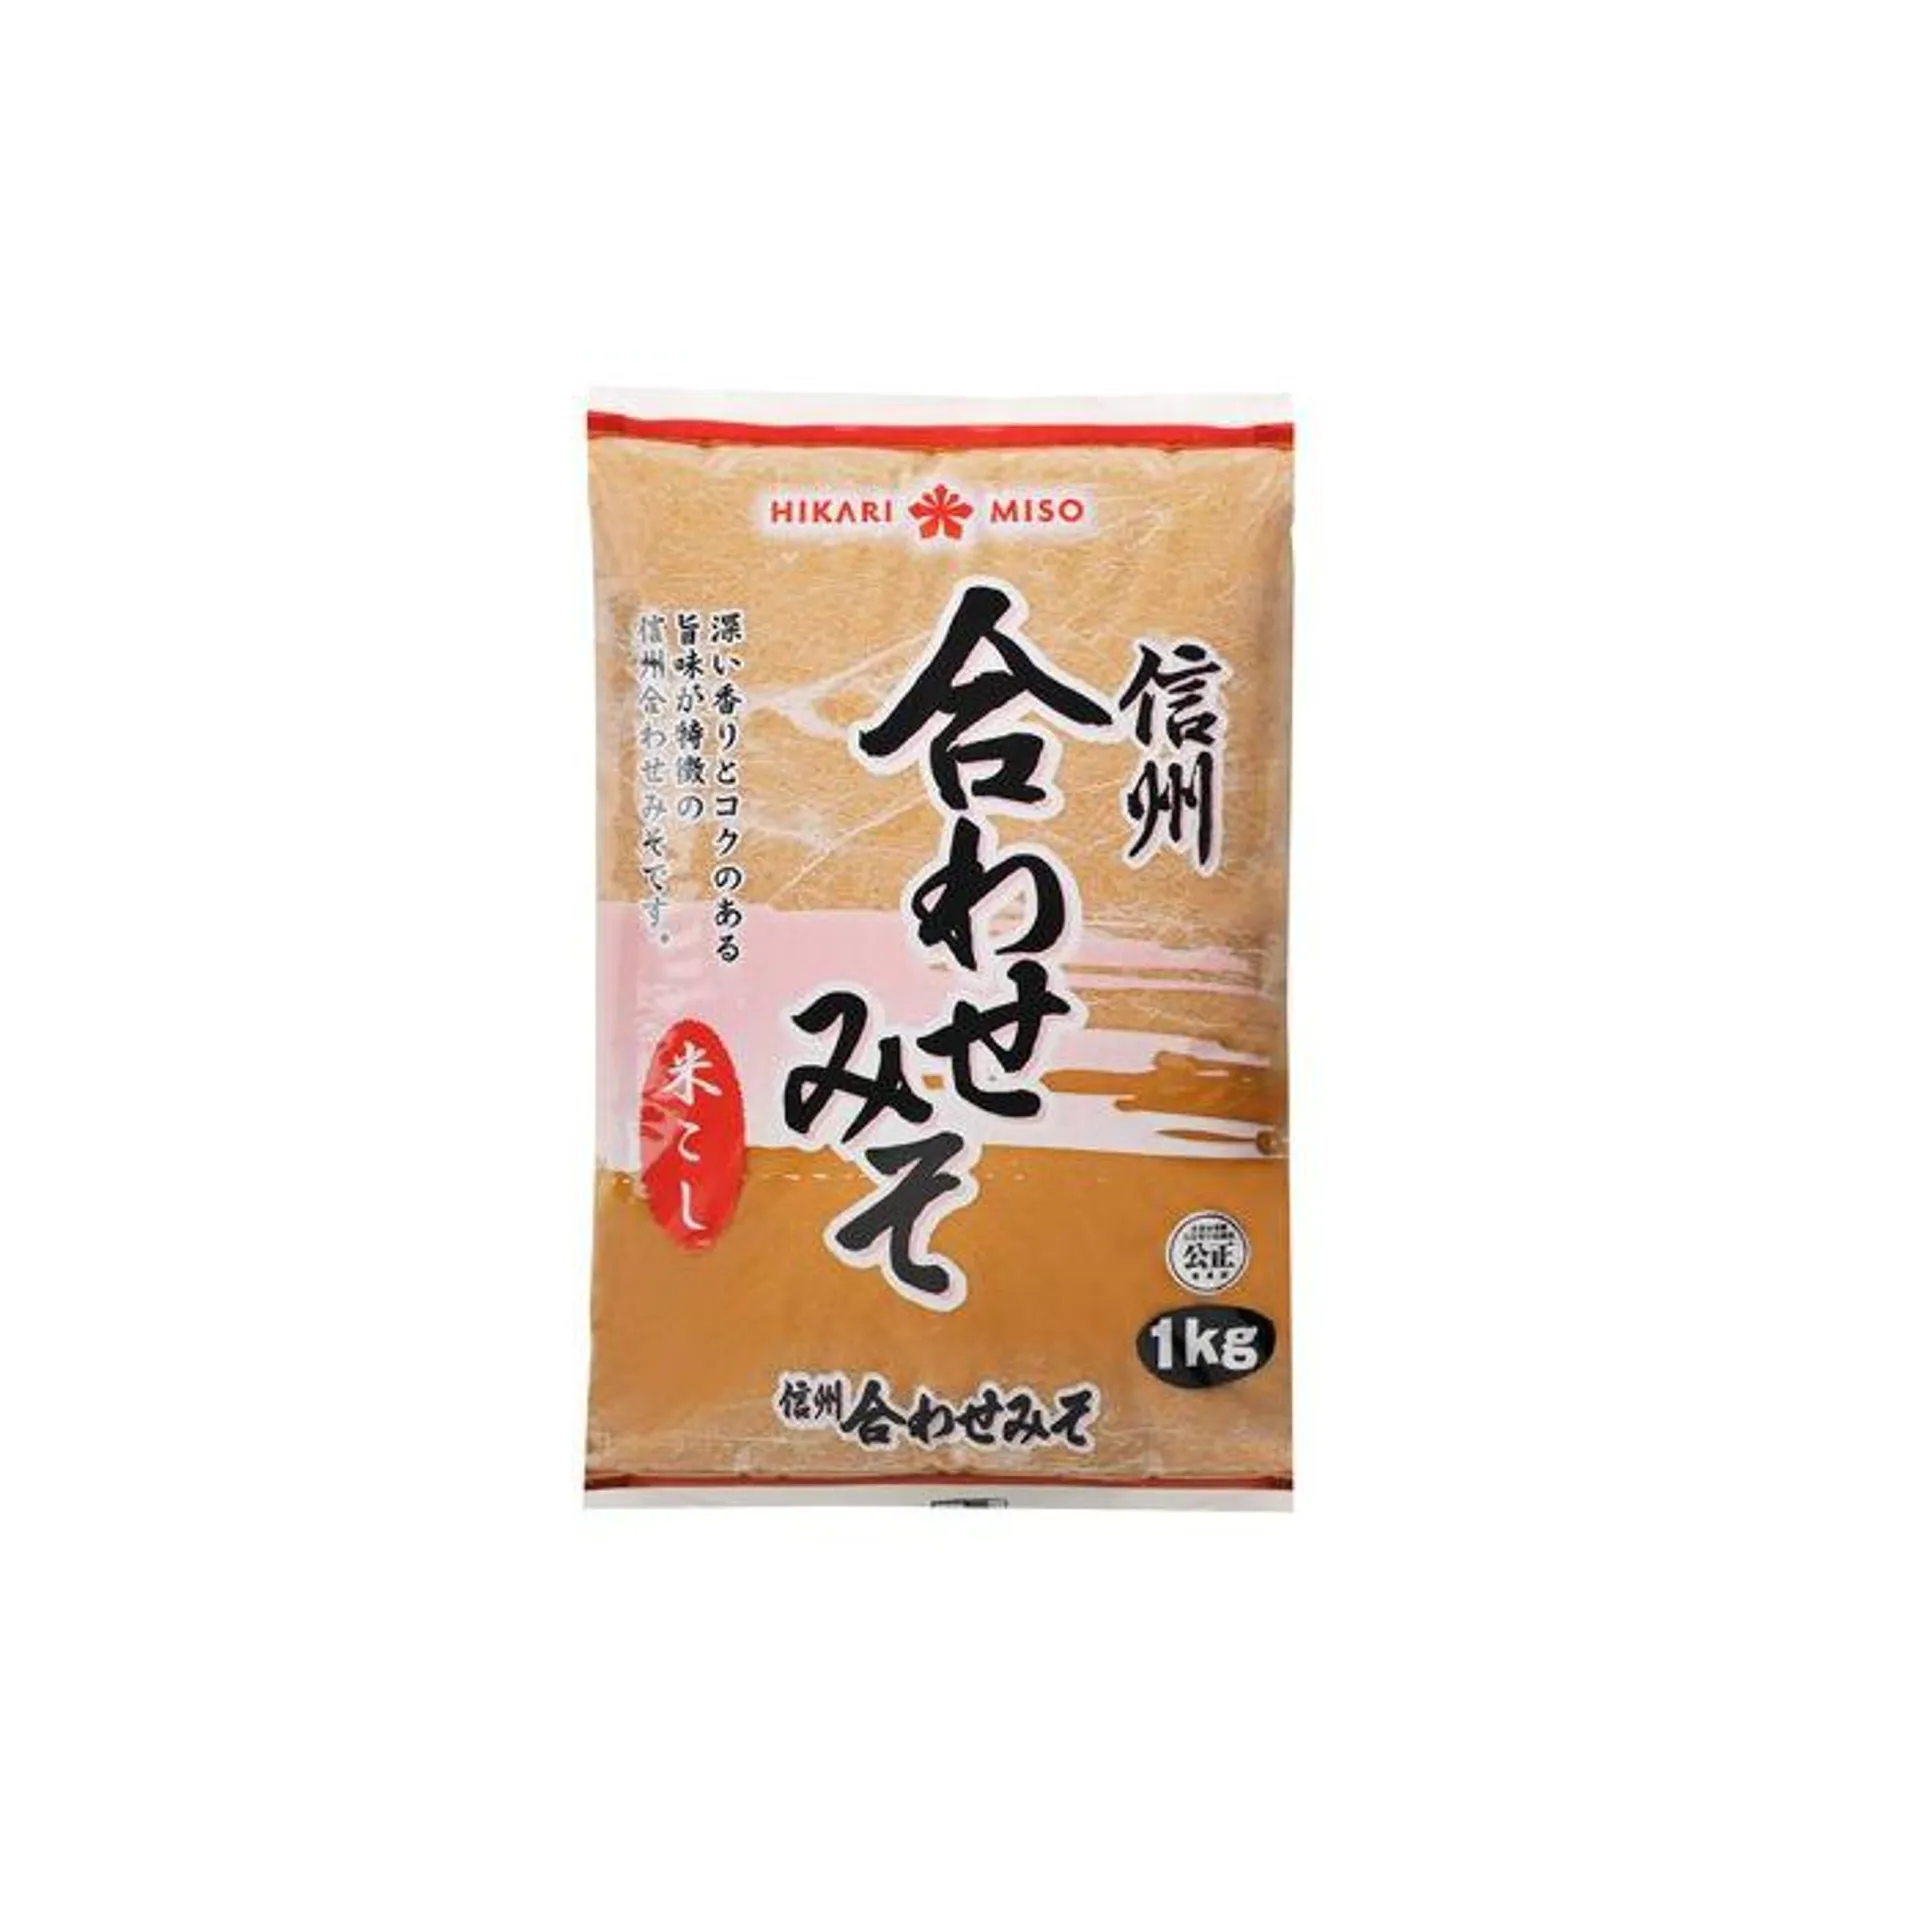 HIKARI MISO / SOYBEEN PASTE (SHINSHU MISO) 1kg